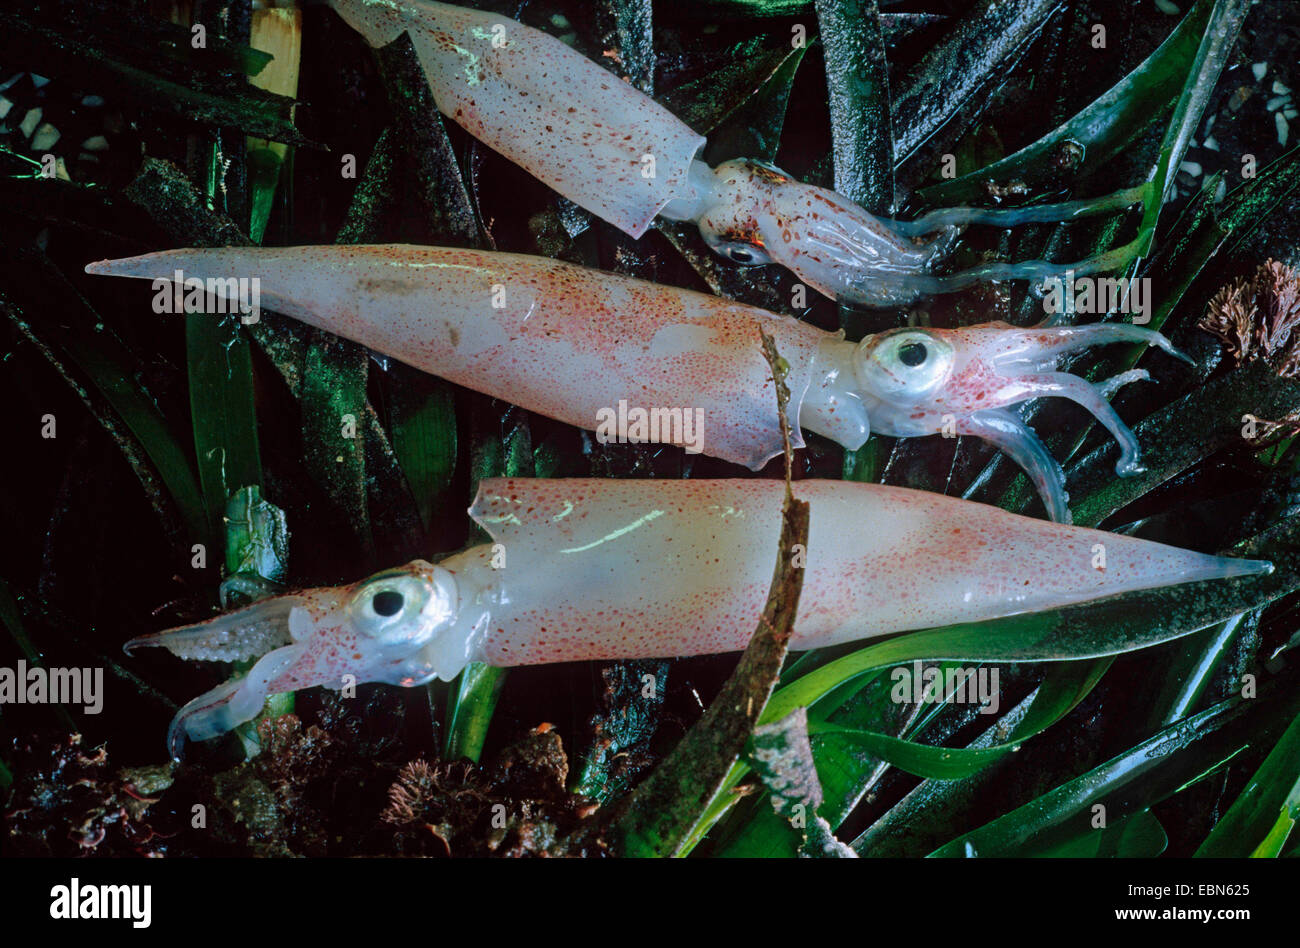 marbled little squid, midsize squid (Alloteuthis media), three animals among algae Stock Photo